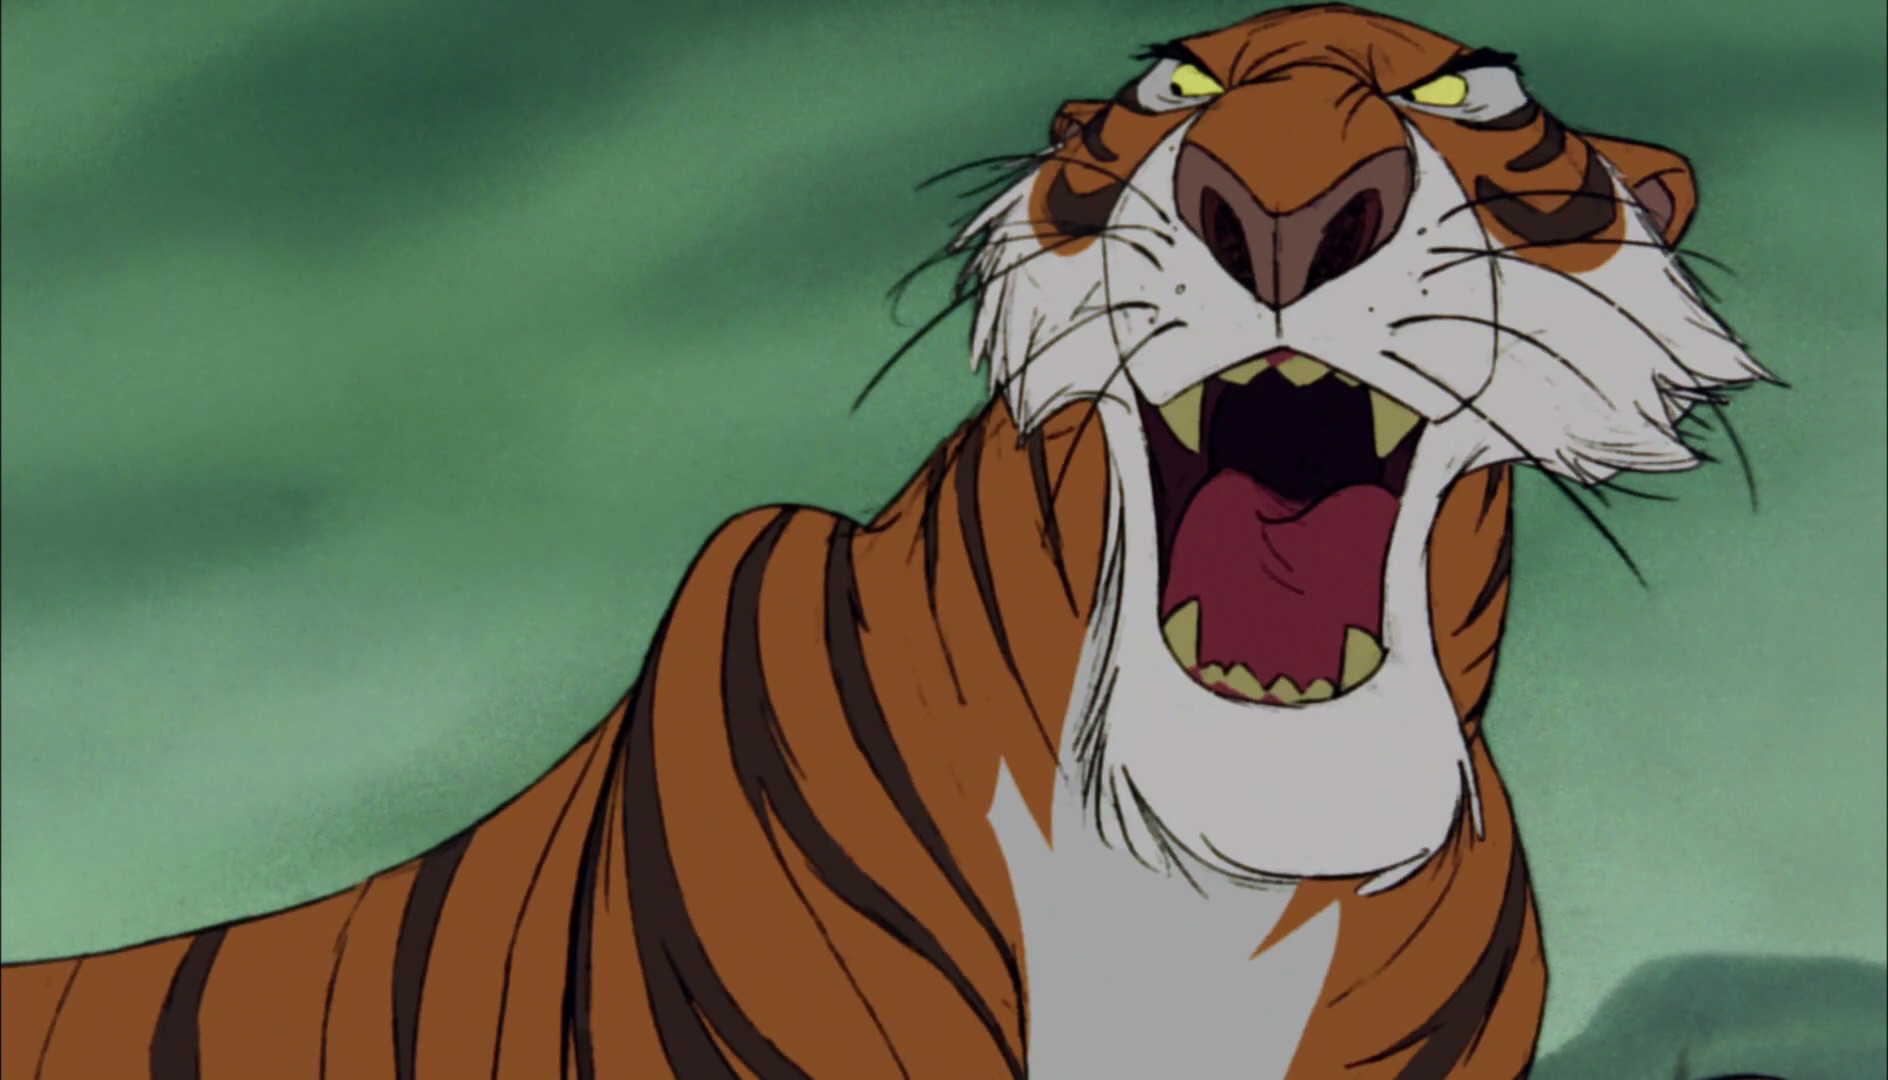 Shere Khan the Tiger is roaring at Baloo the Bear